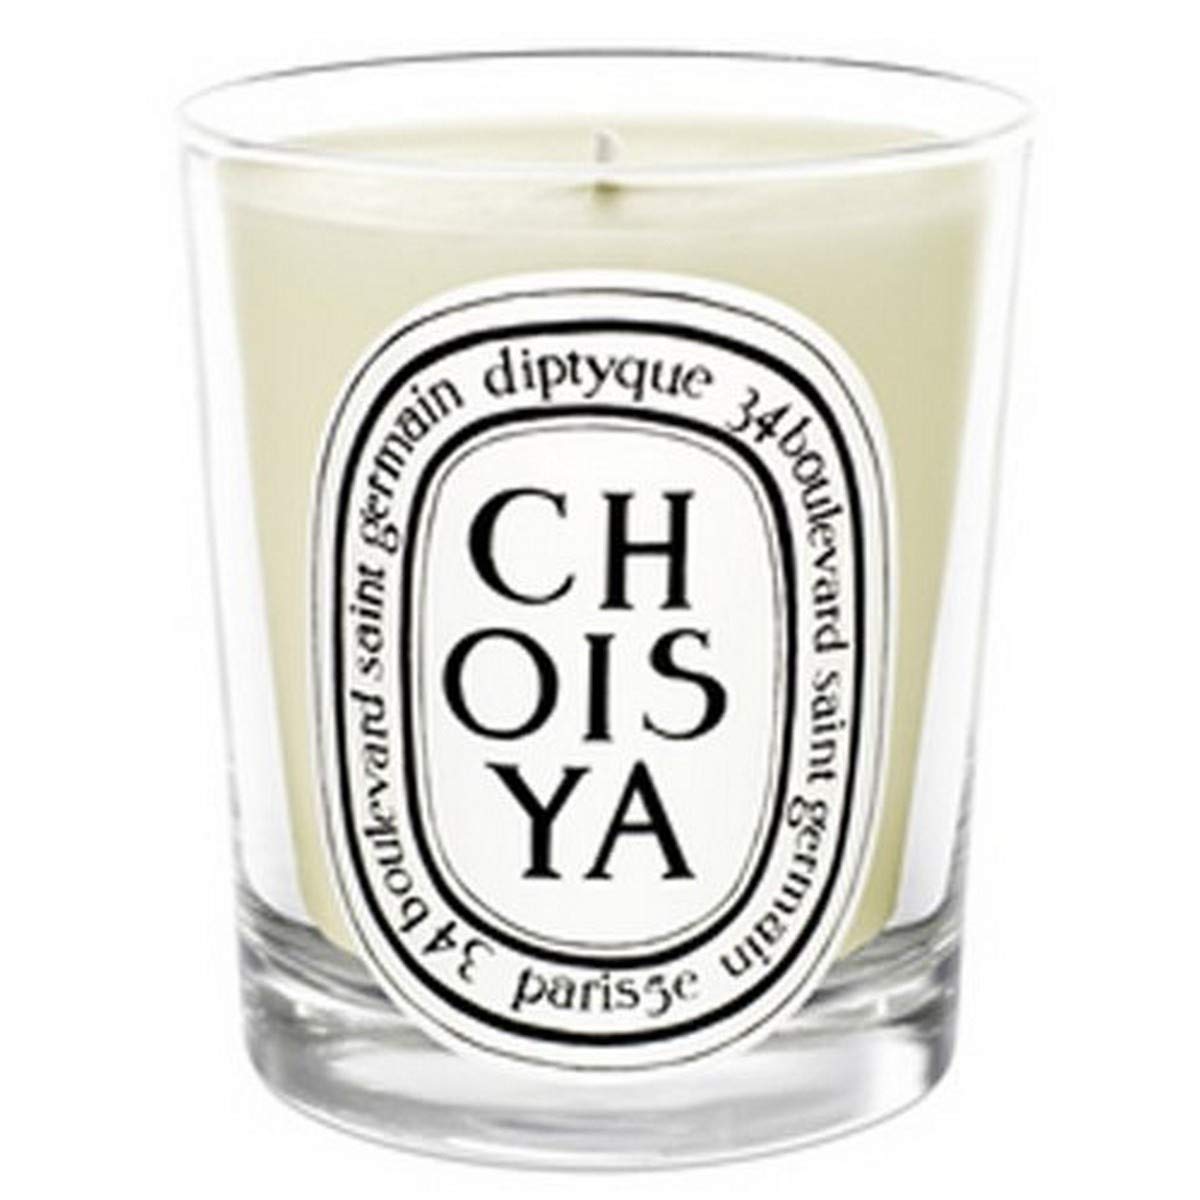 Diptyque Candle Choisya